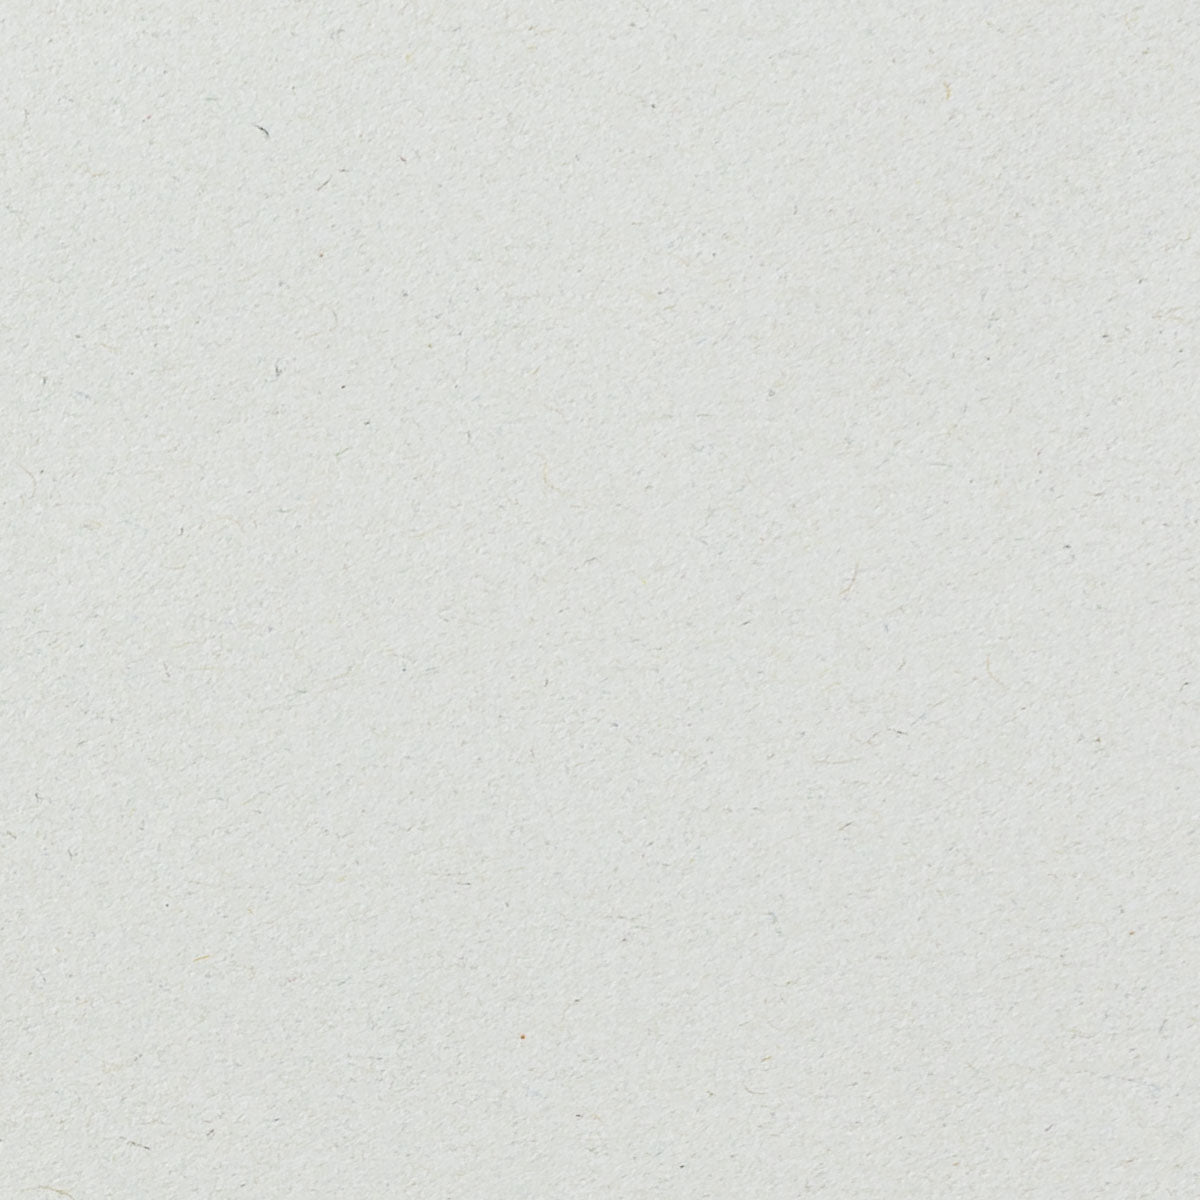 Cartoncino Bianco liscio 100% Riciclato - 190gsm - Manamant Paper Tales -FGB901700M1A